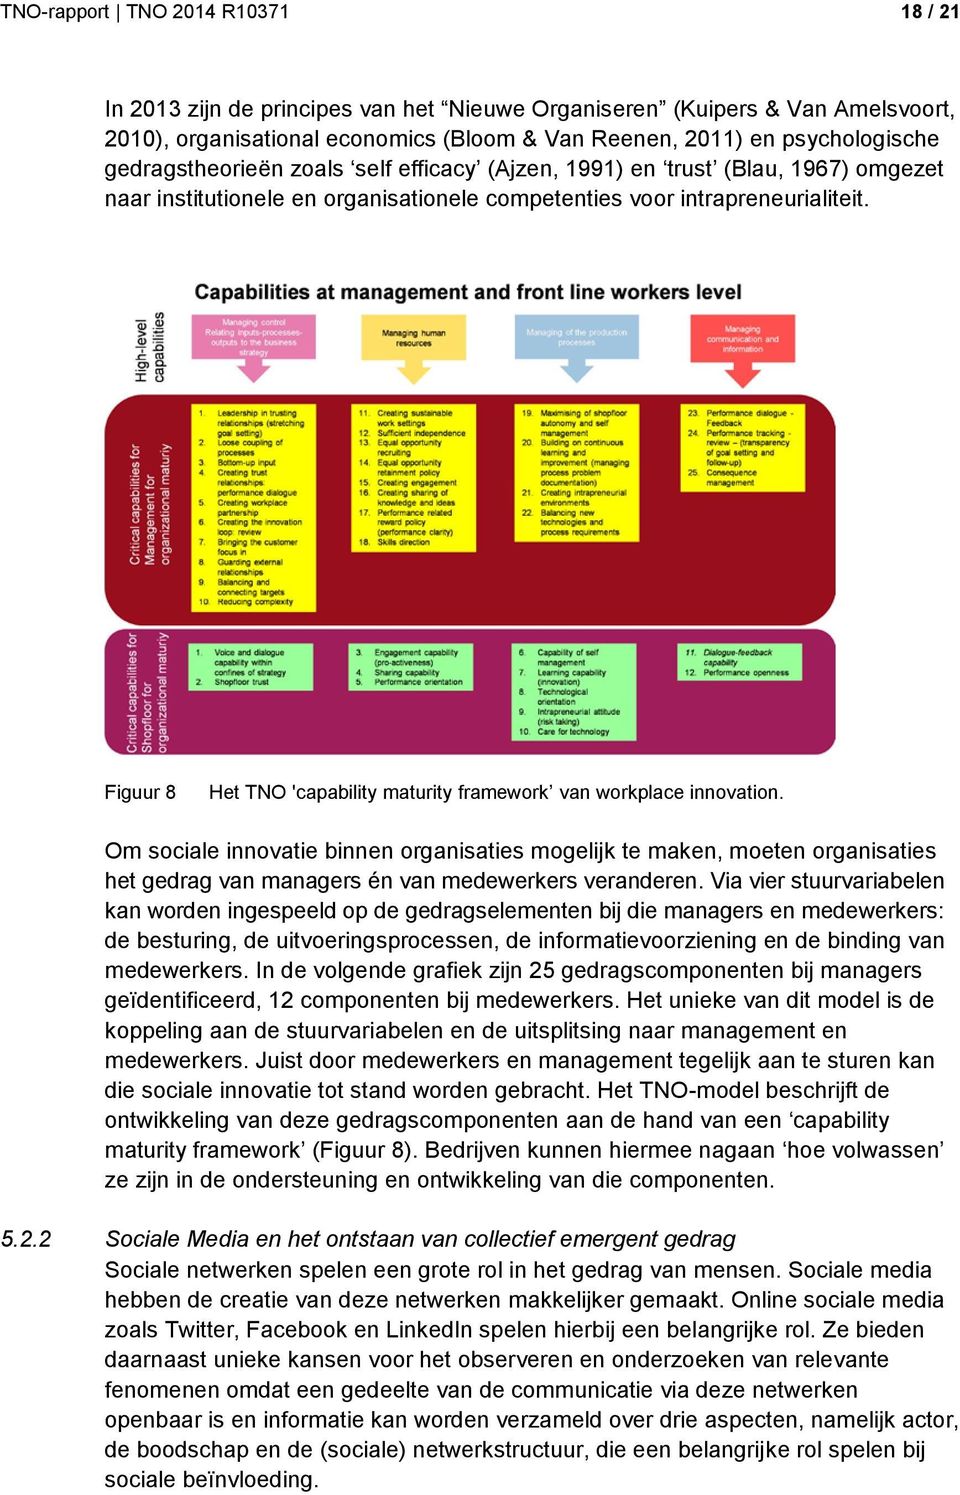 Figuur 8 Het TNO 'capability maturity framework van workplace innovation.